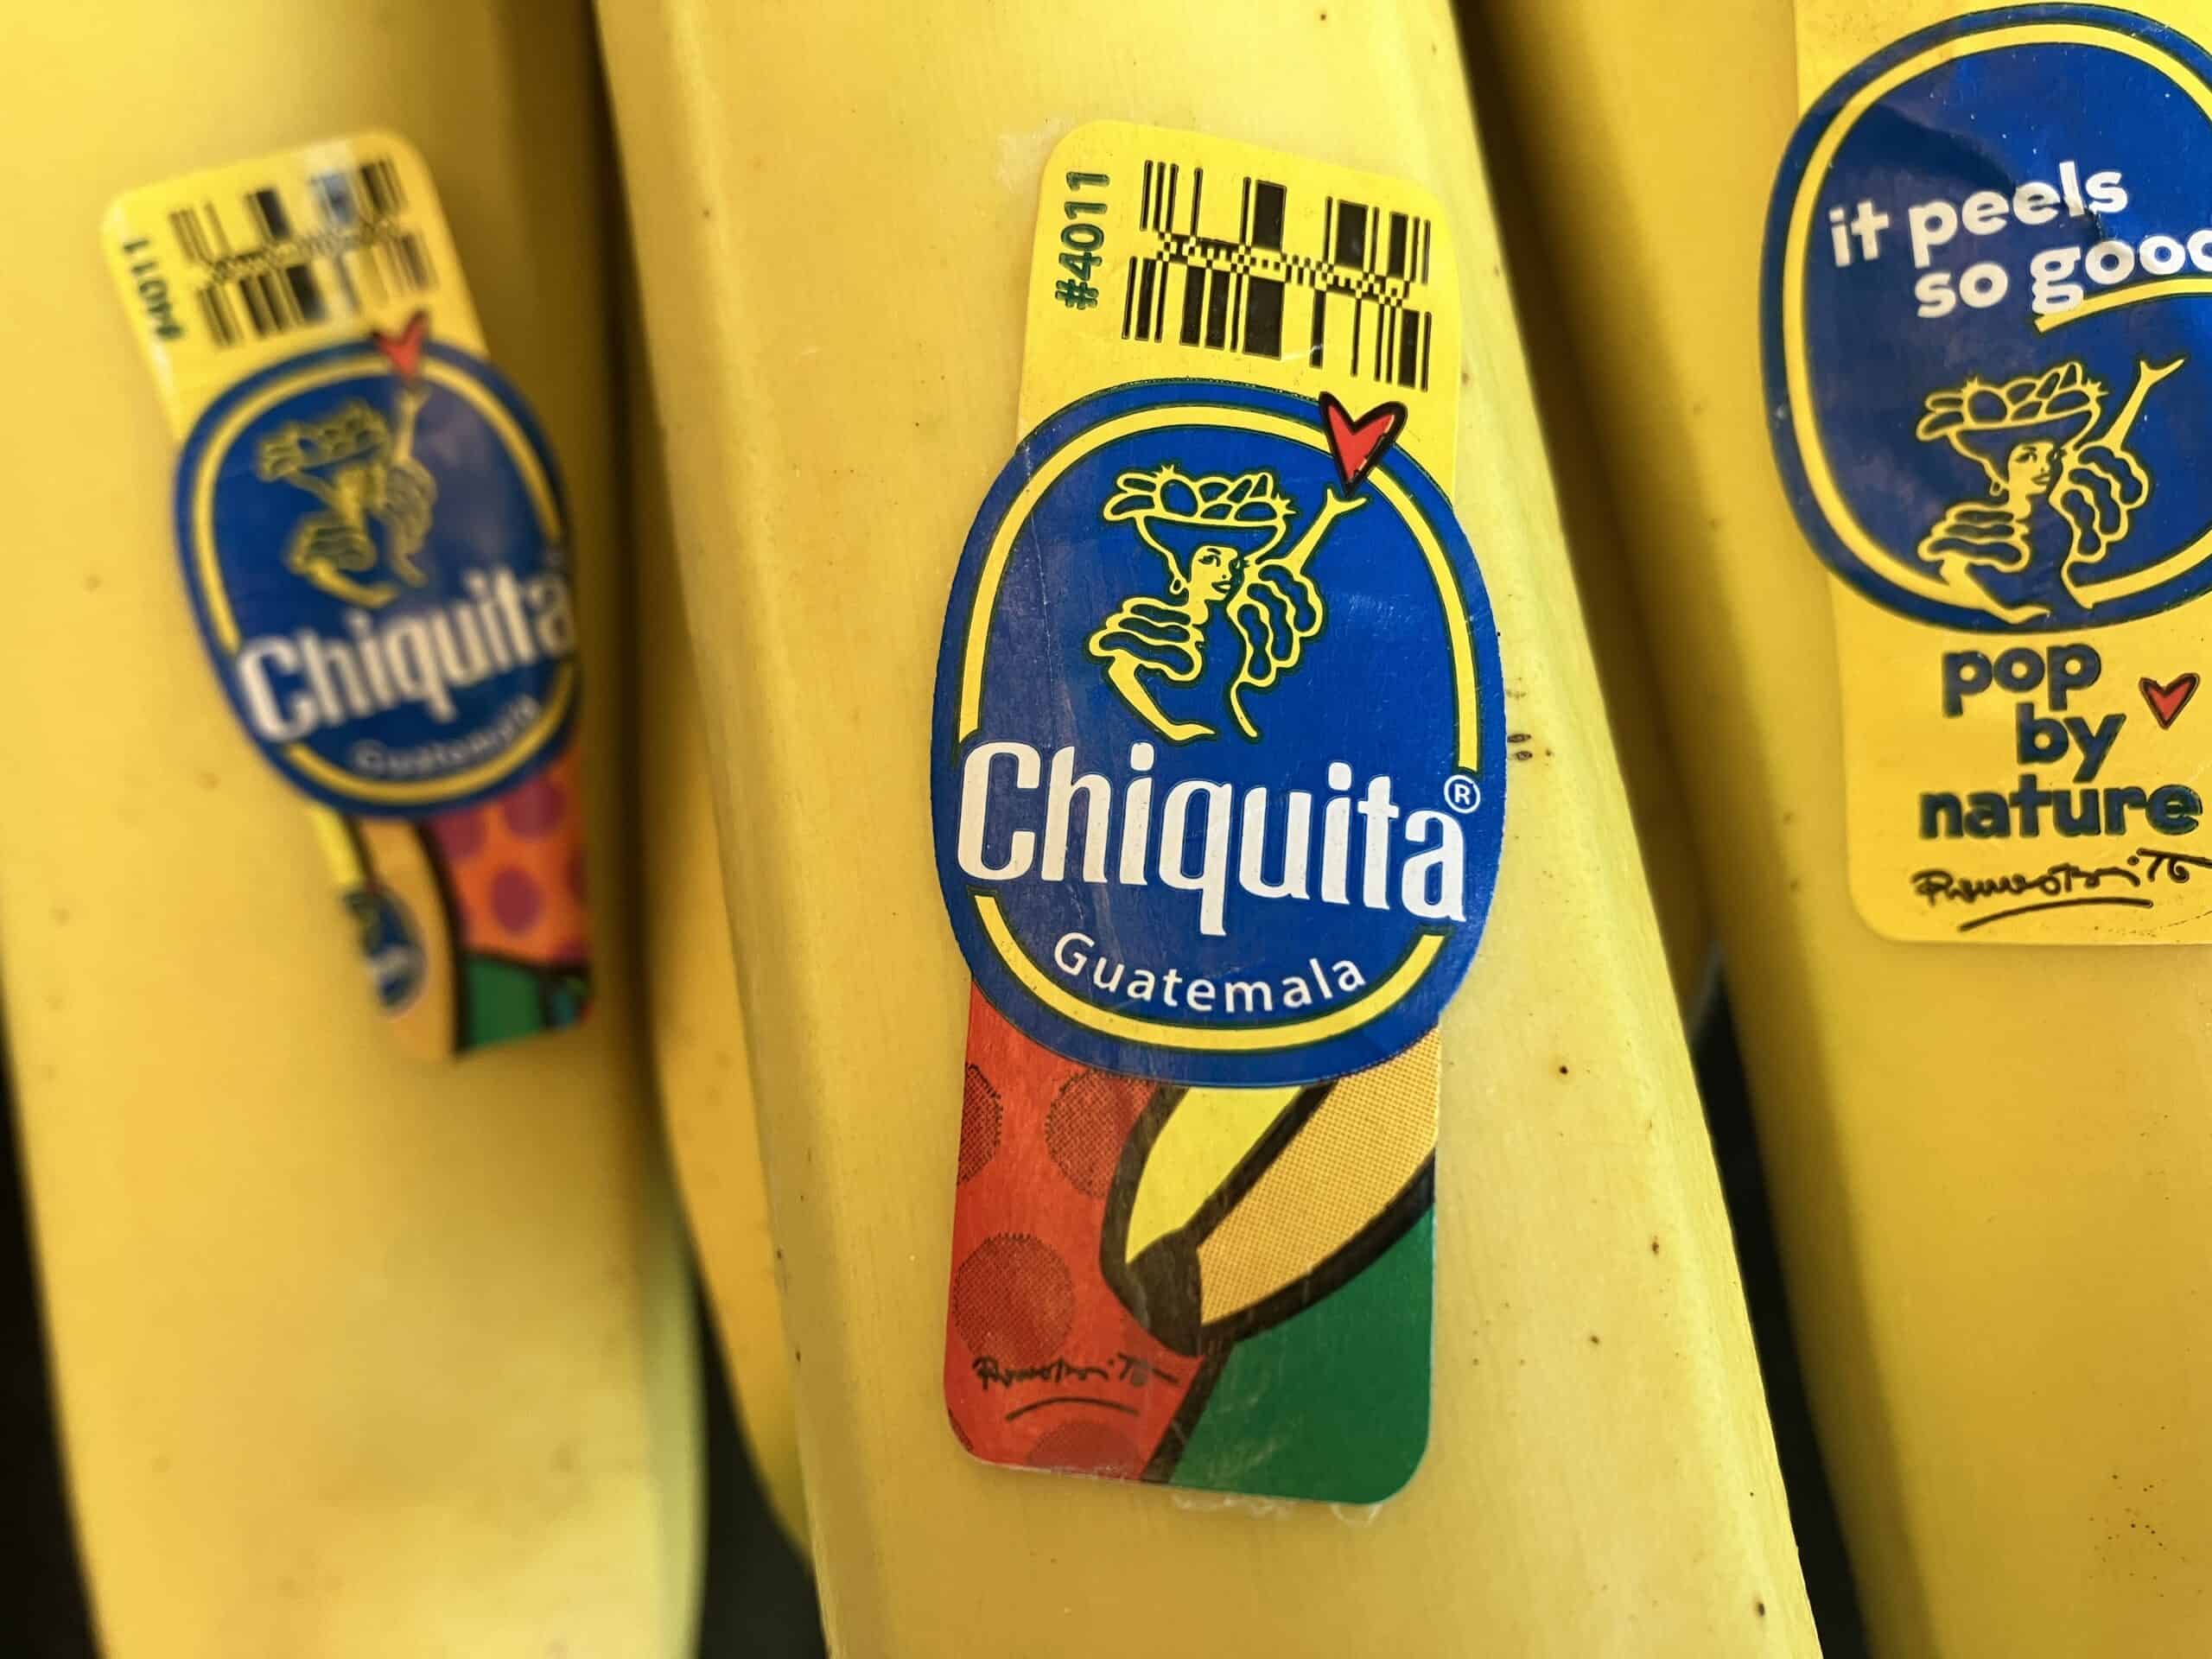 Chiquita banana label, Guatemala